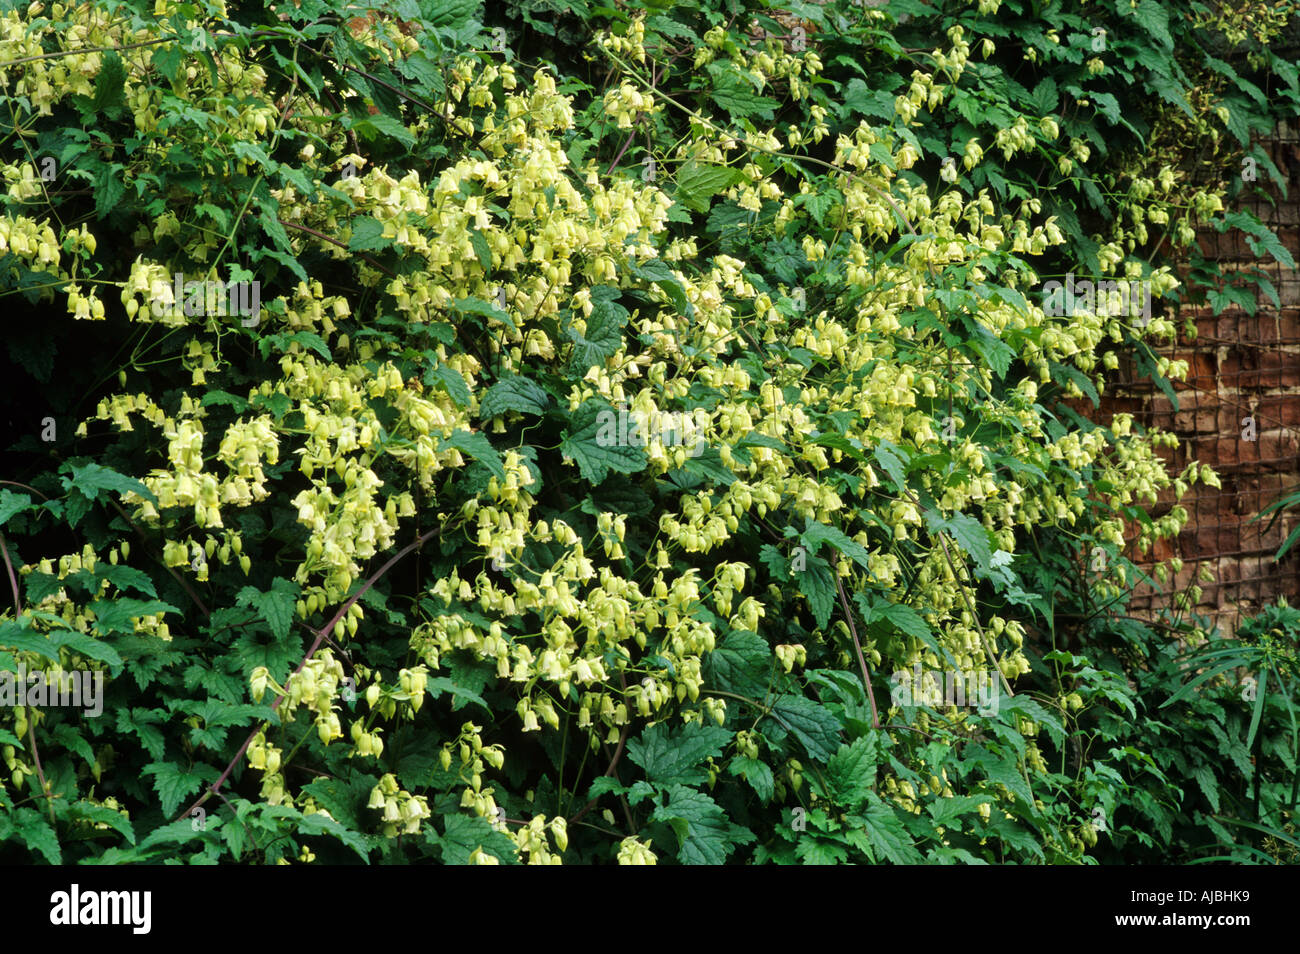 Clematis rehderiana, climbing garden plant, yellow flowers Stock Photo